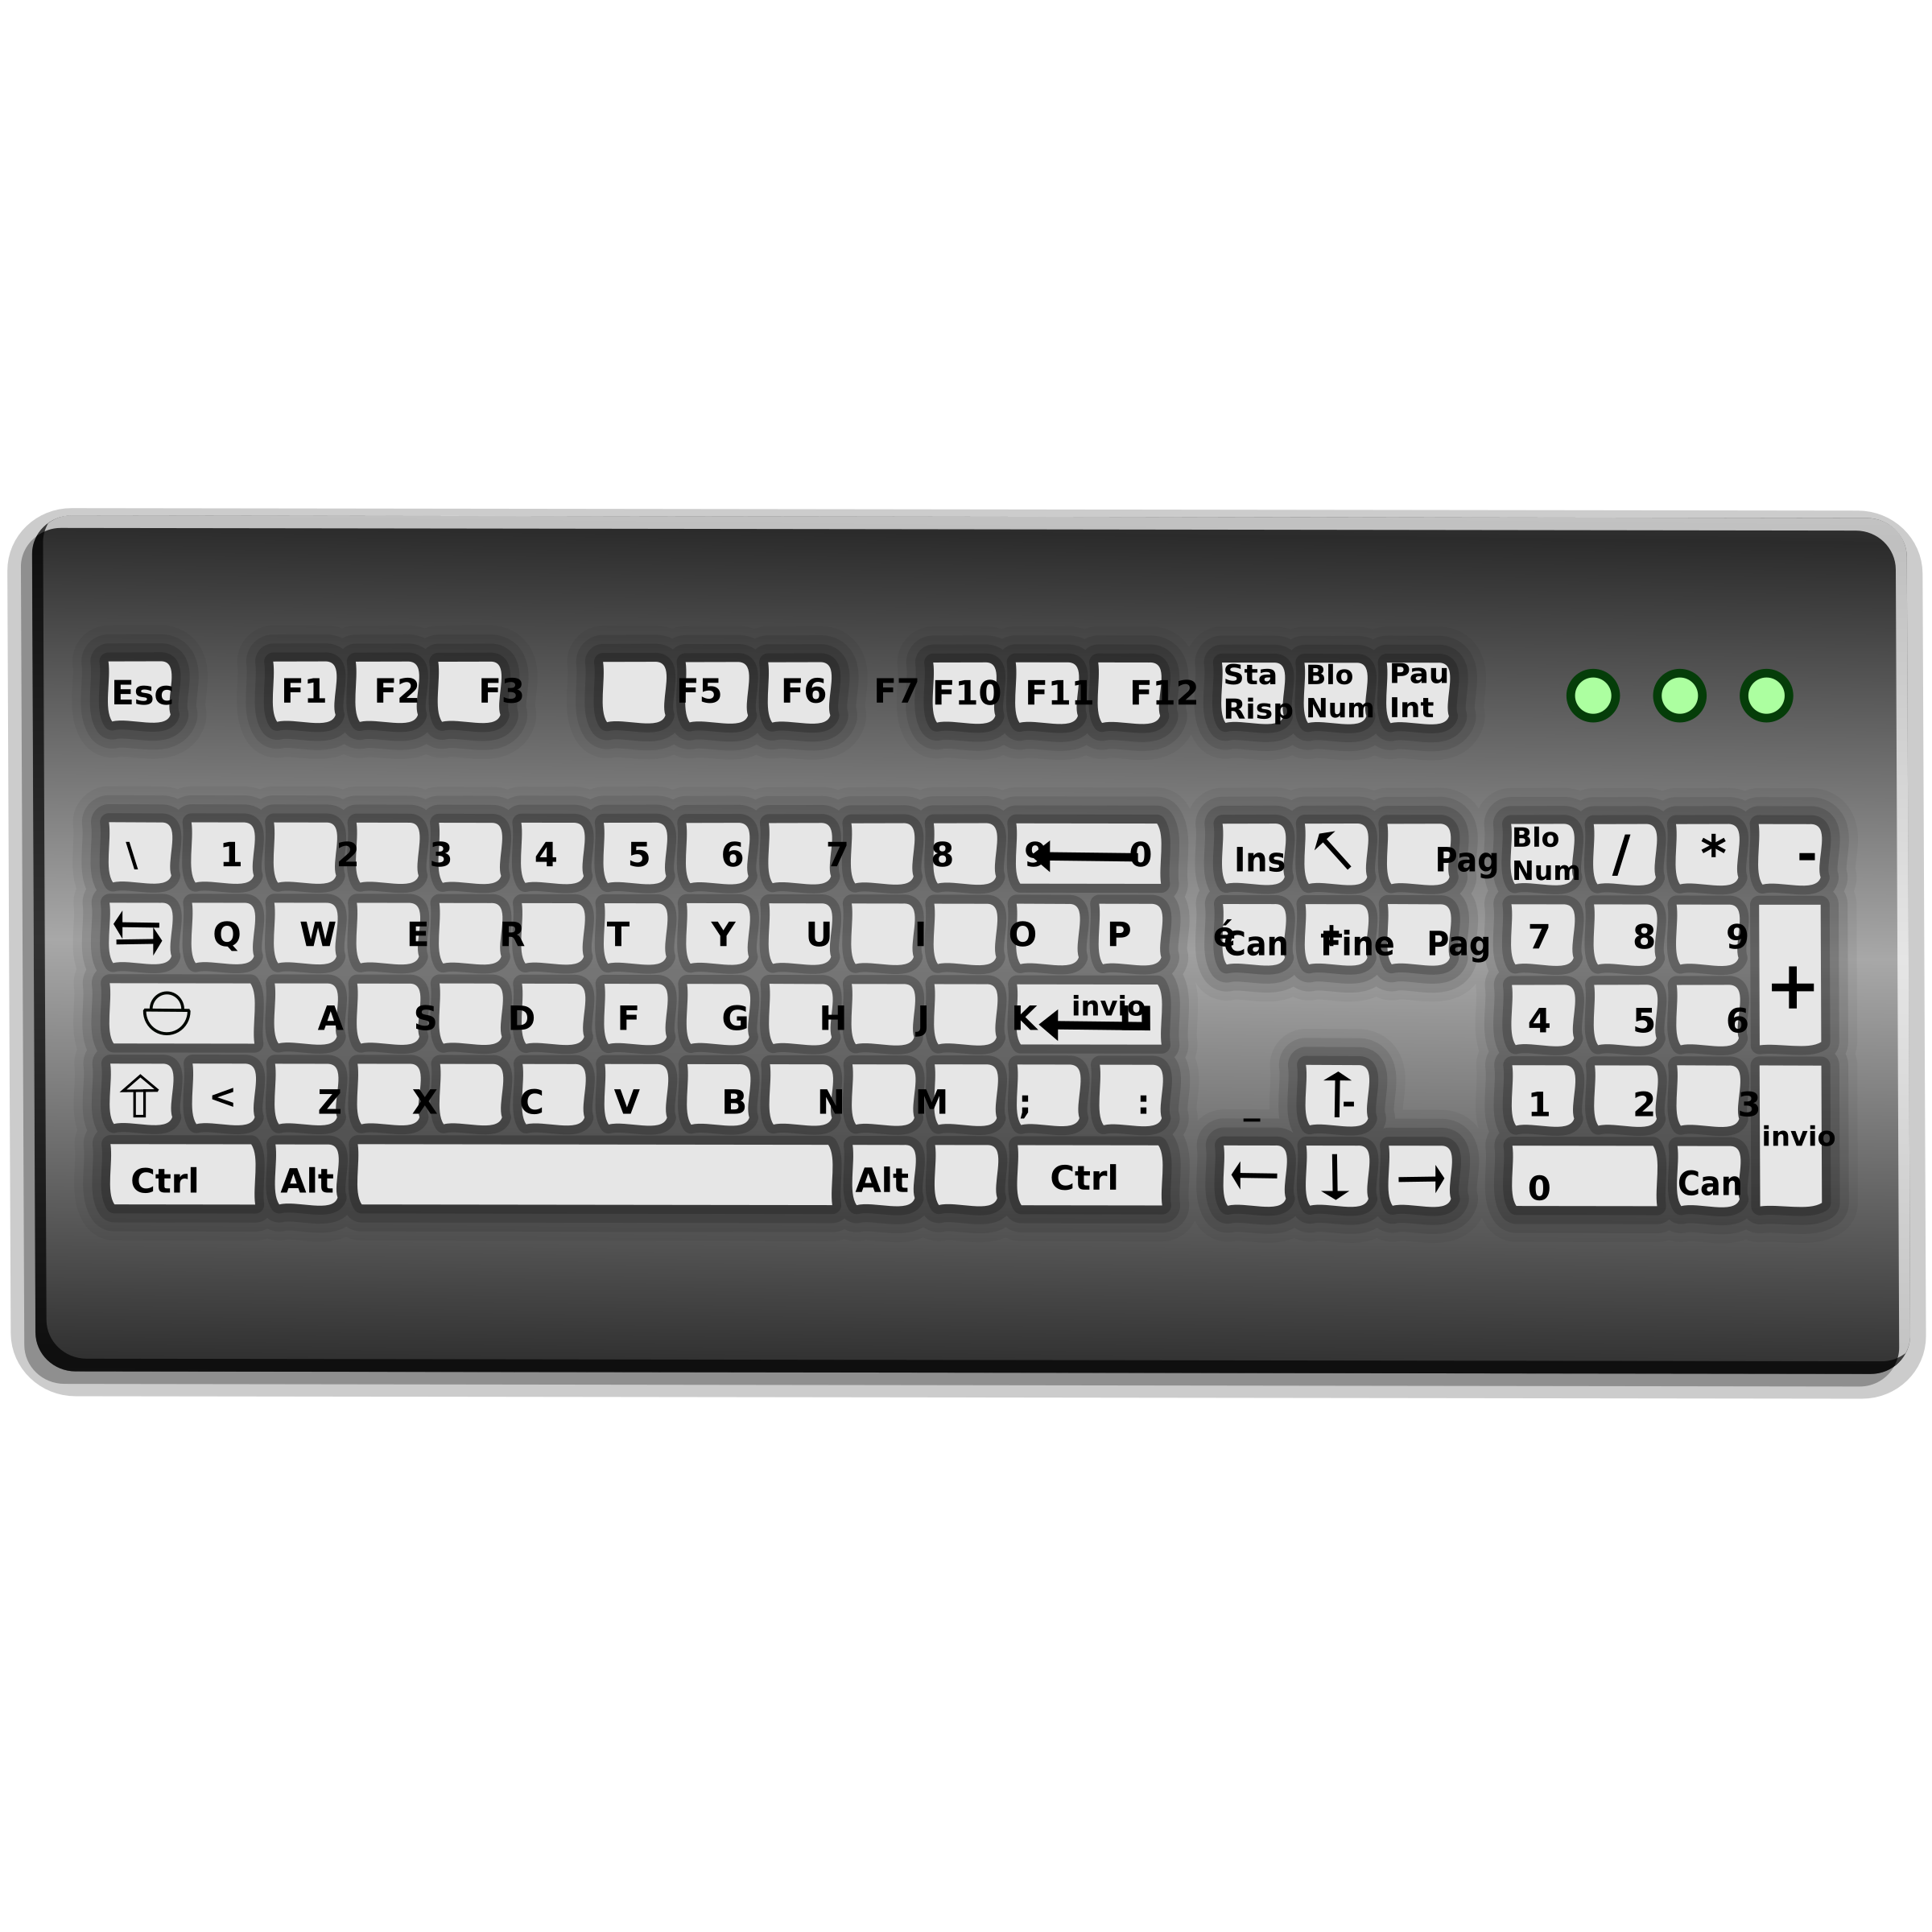 Big image png. Clipart computer keyboard